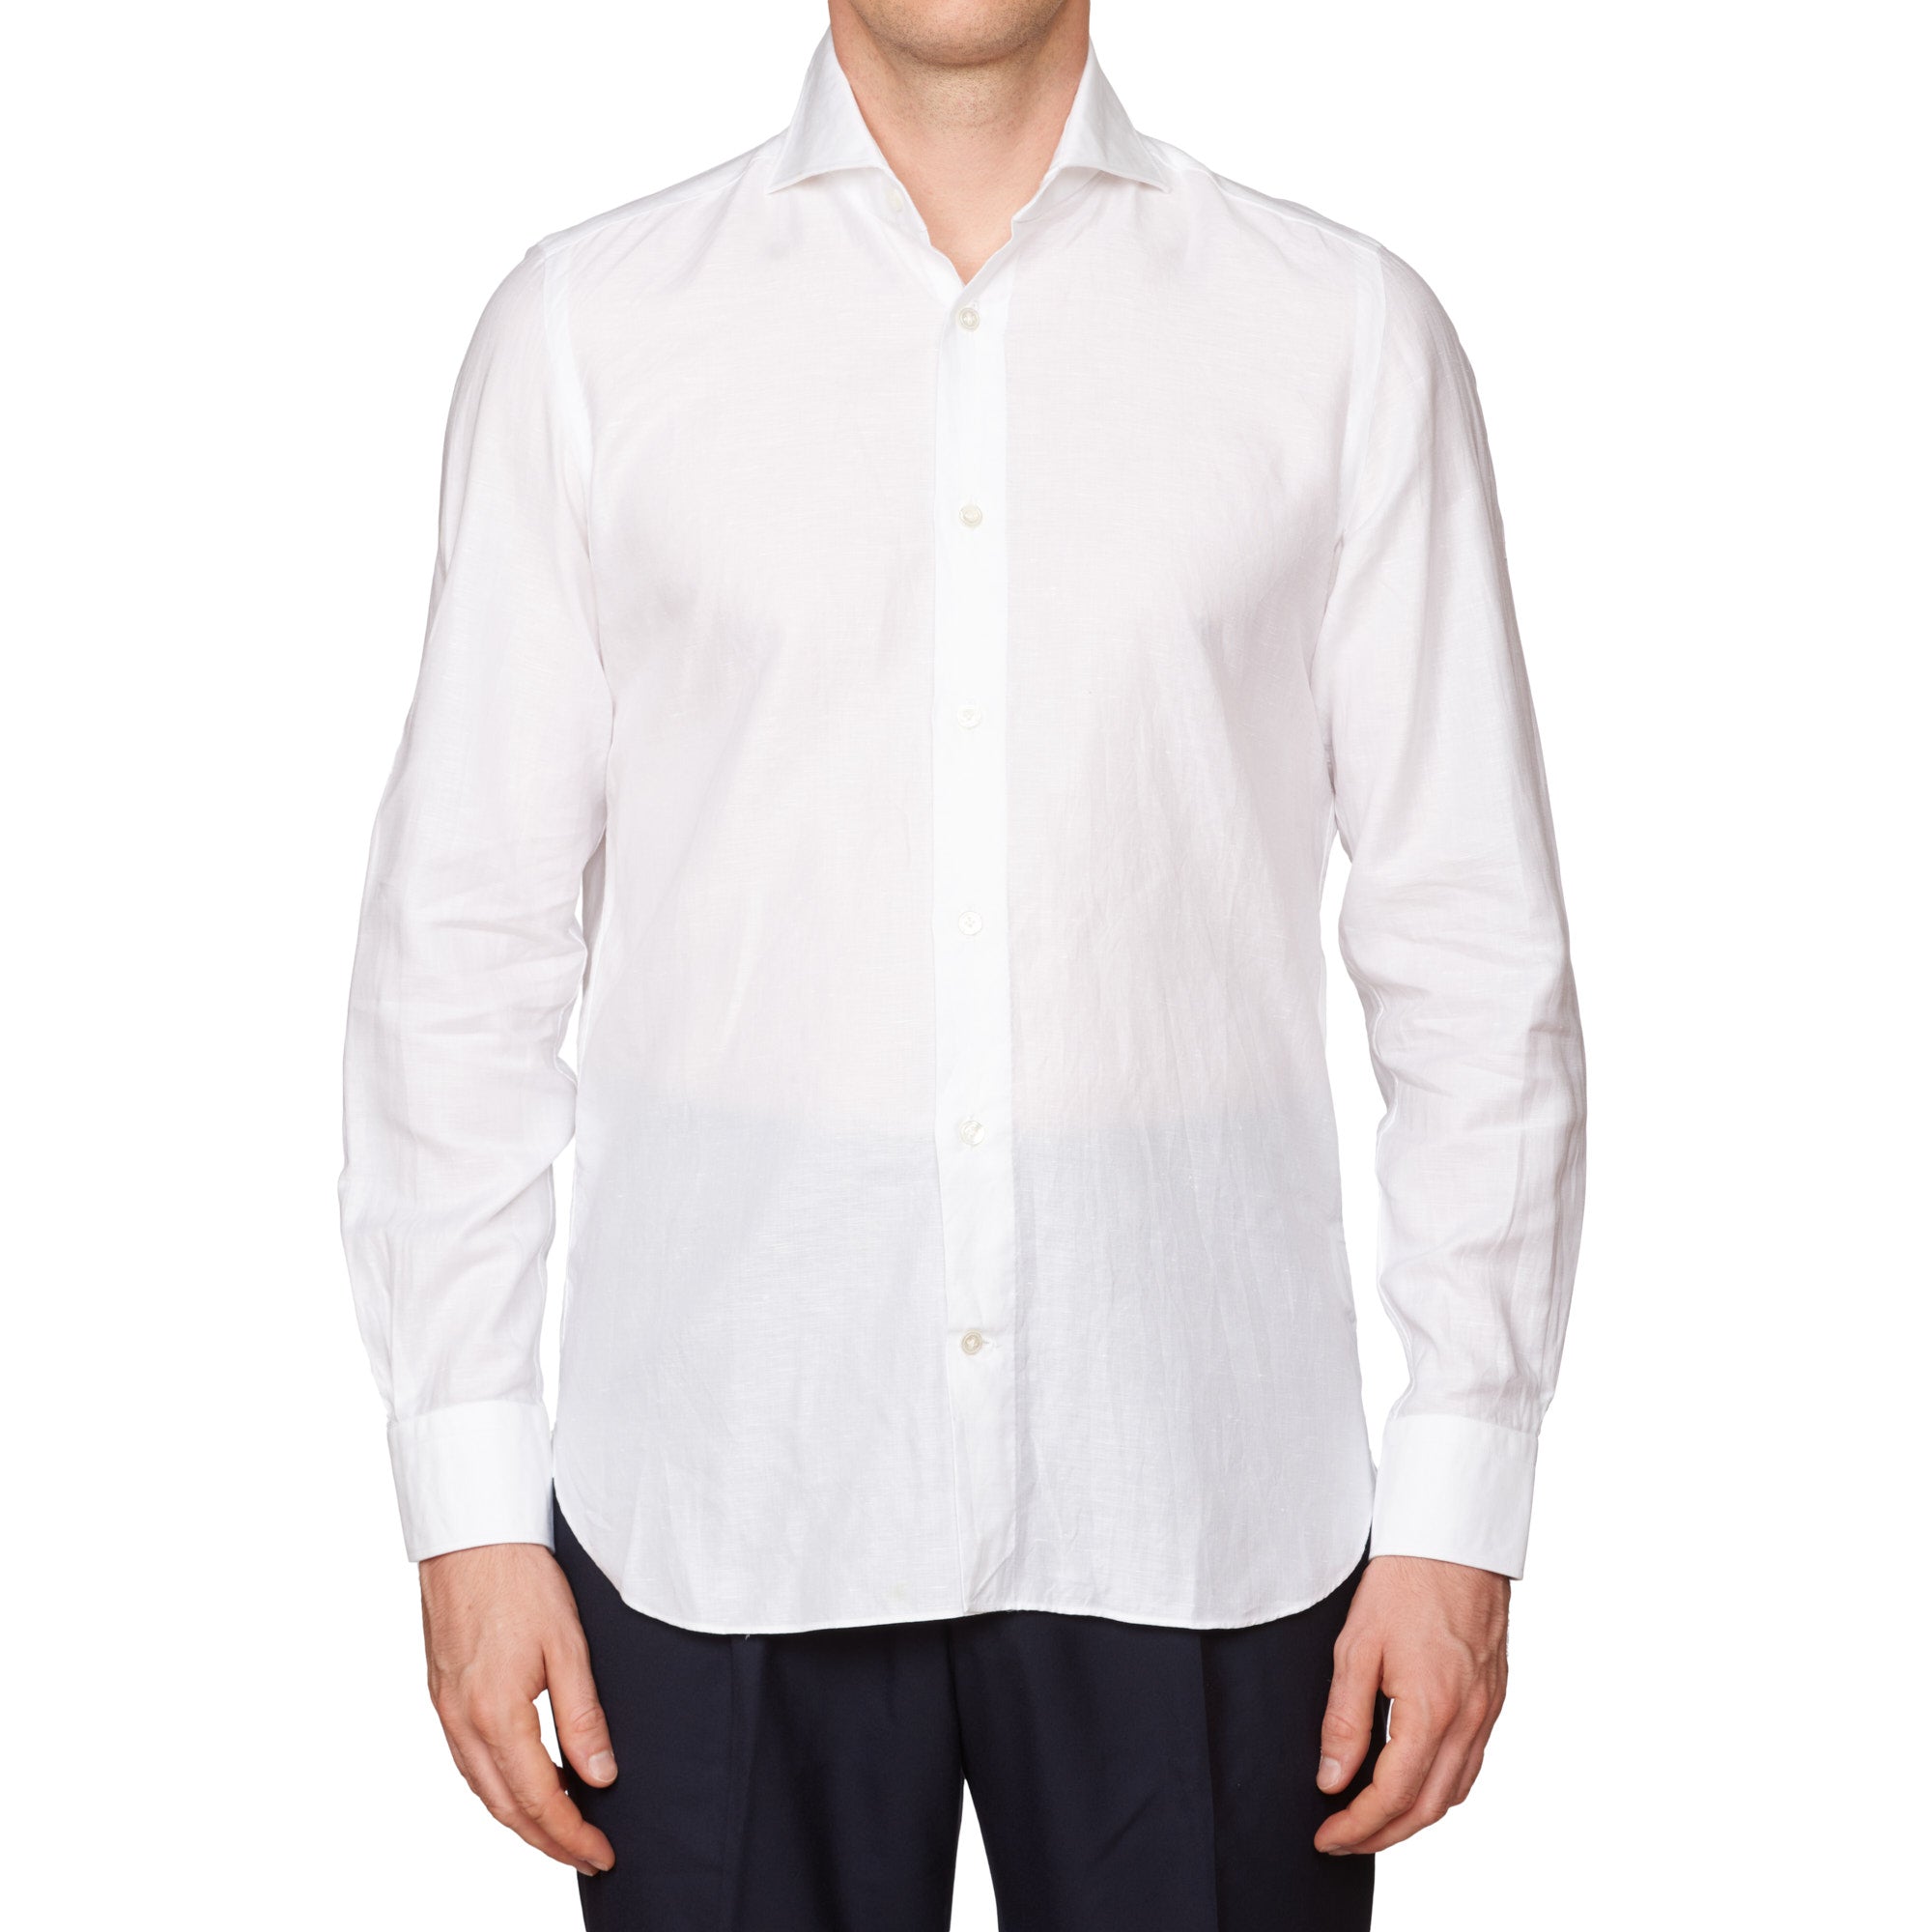 VINCENZO DI RUGGIERO Handmade Solid White Cotton-Linen Dress Shirt EU 40 US 15.75